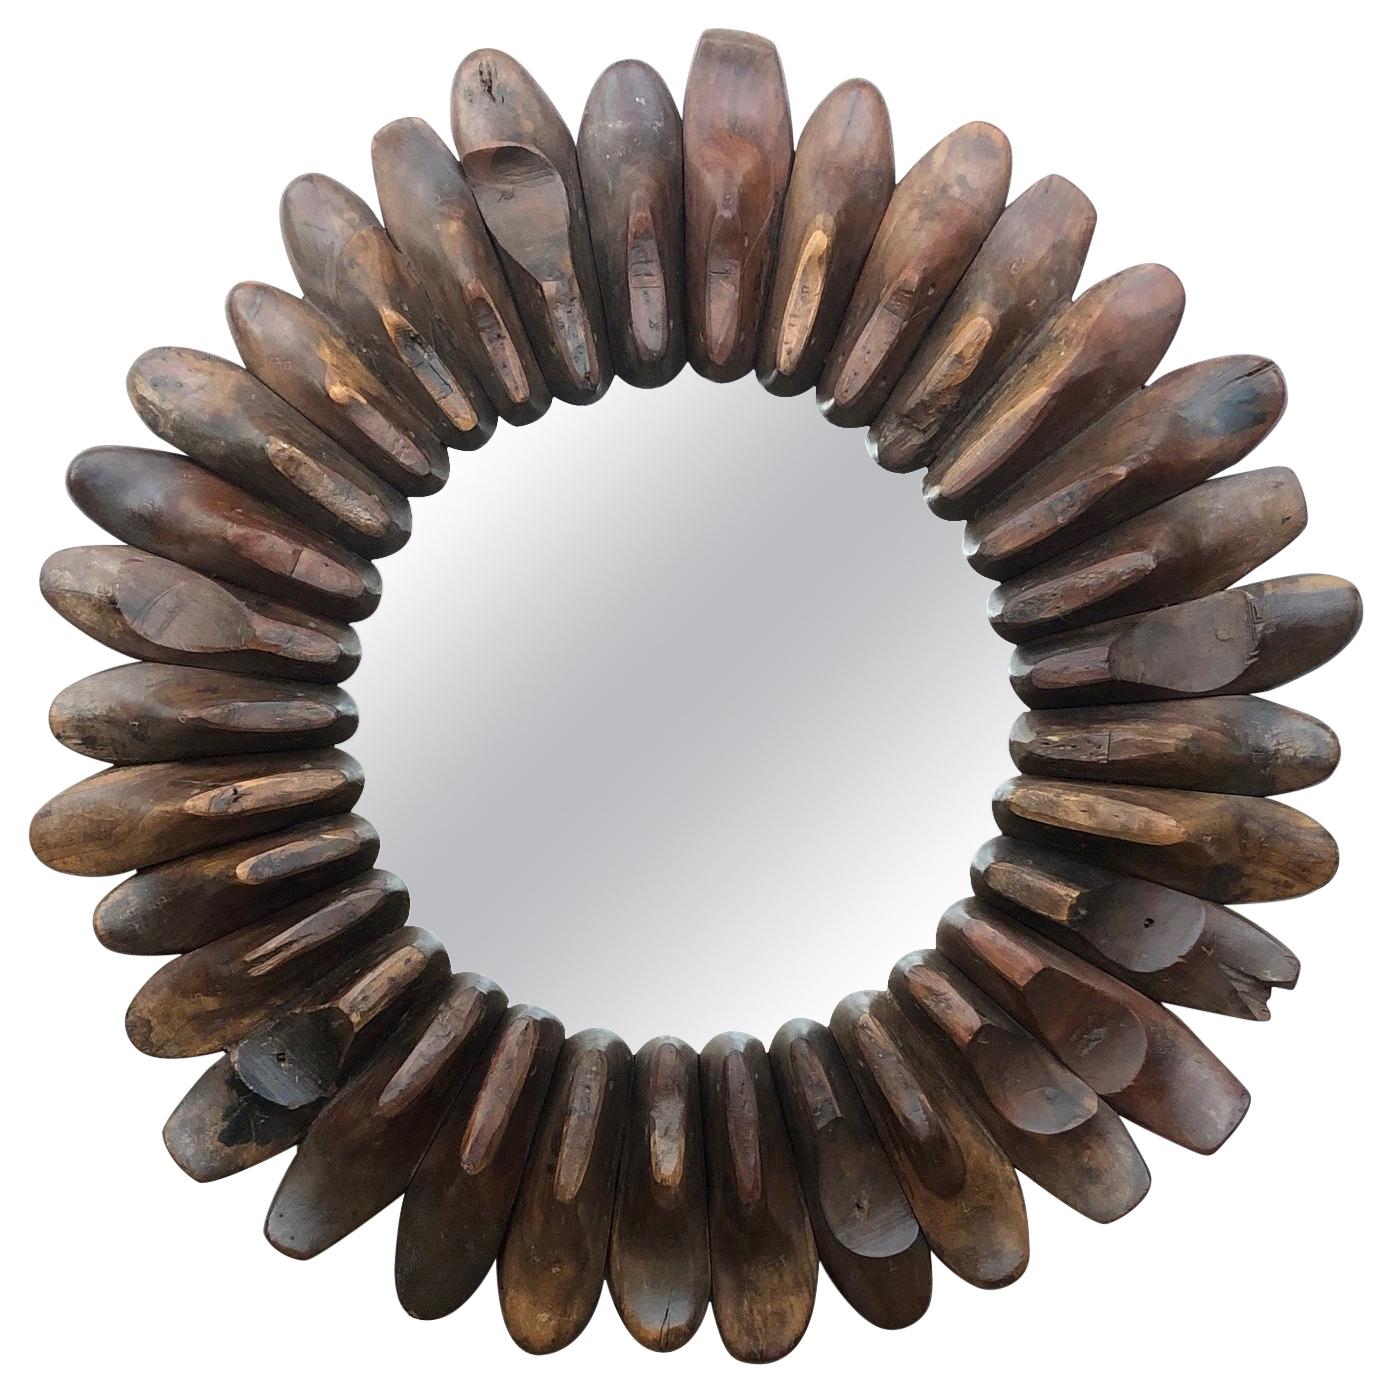 Whimsically-Assembled Circular Folk Art Mirror of Antique Wooden Shoe Molds